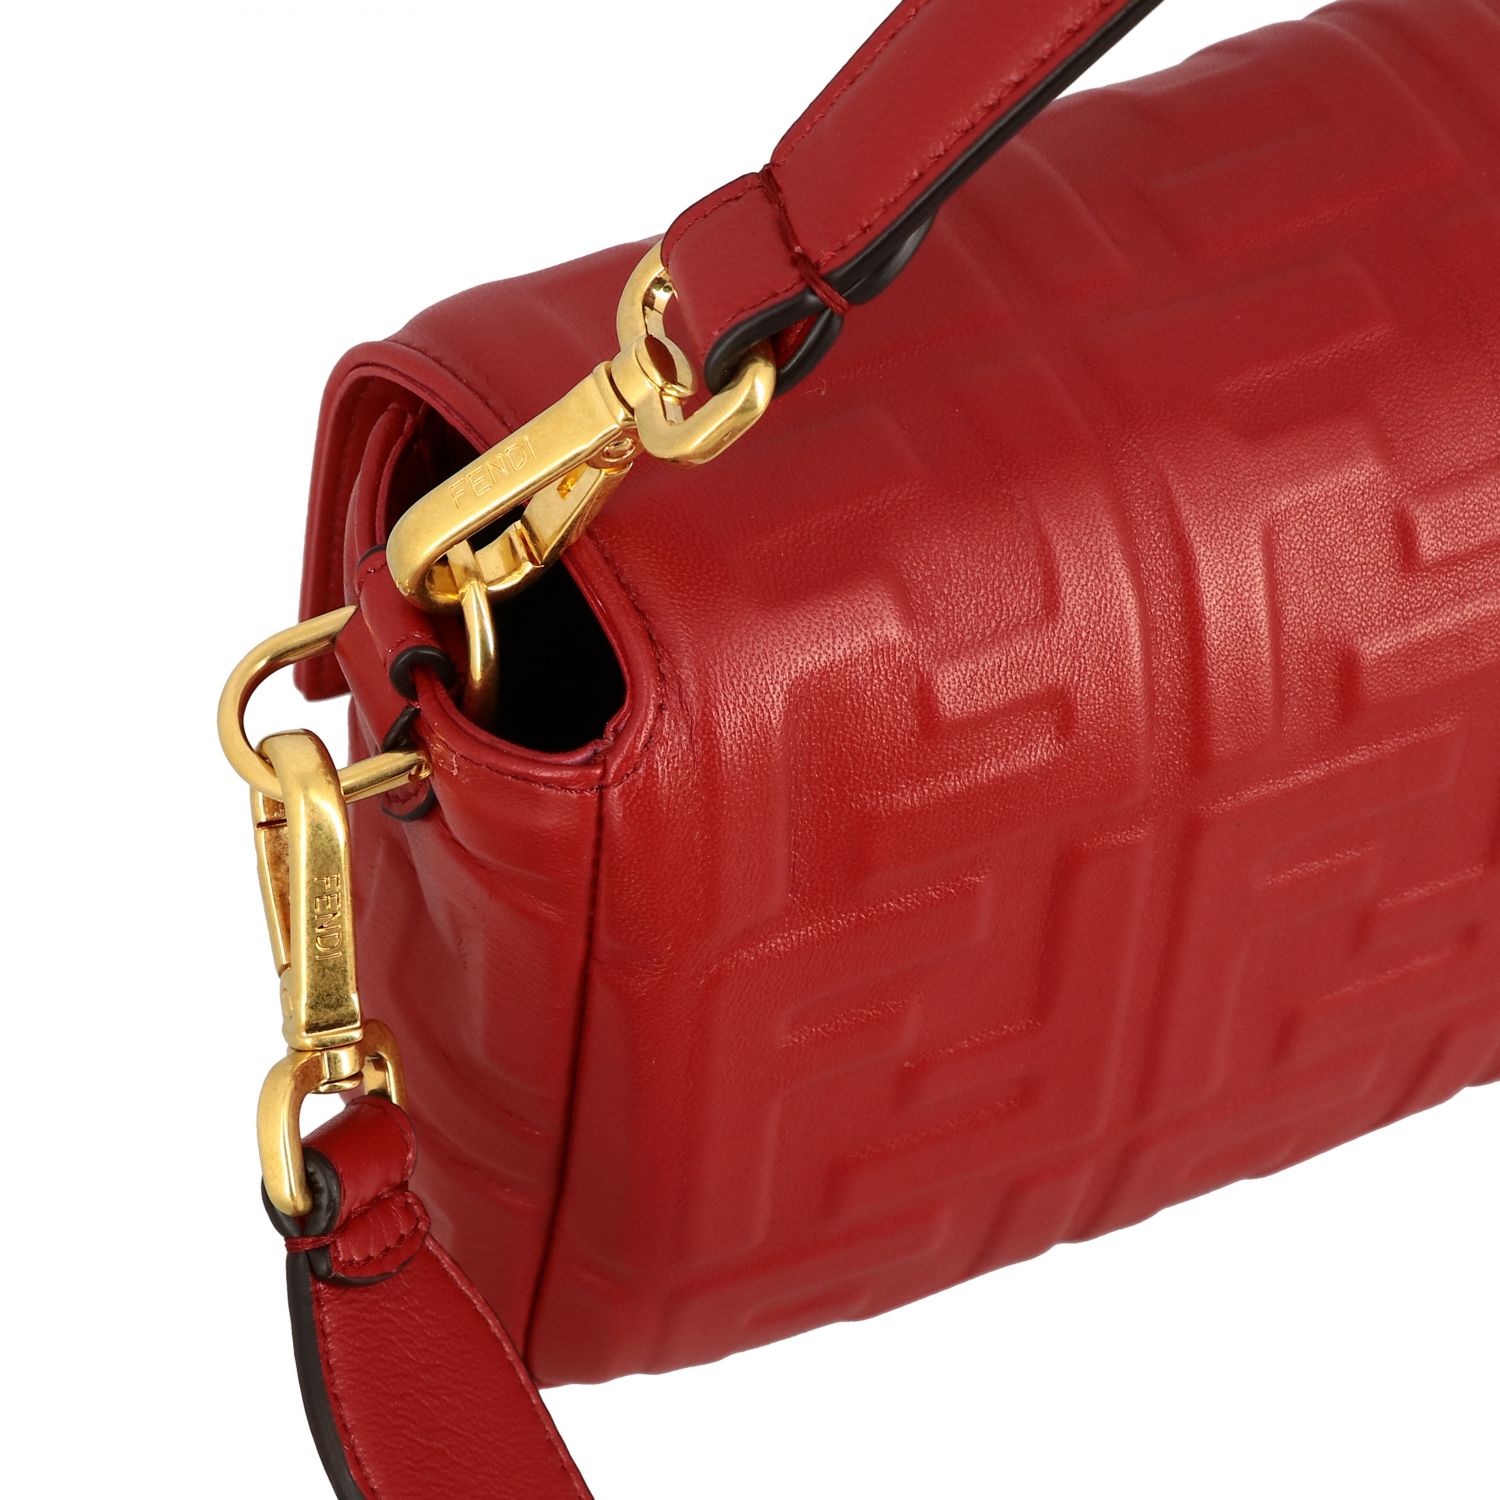 FENDI: Baguette bag in leather with embossed logo | Crossbody Bags Fendi Women Red | Crossbody 